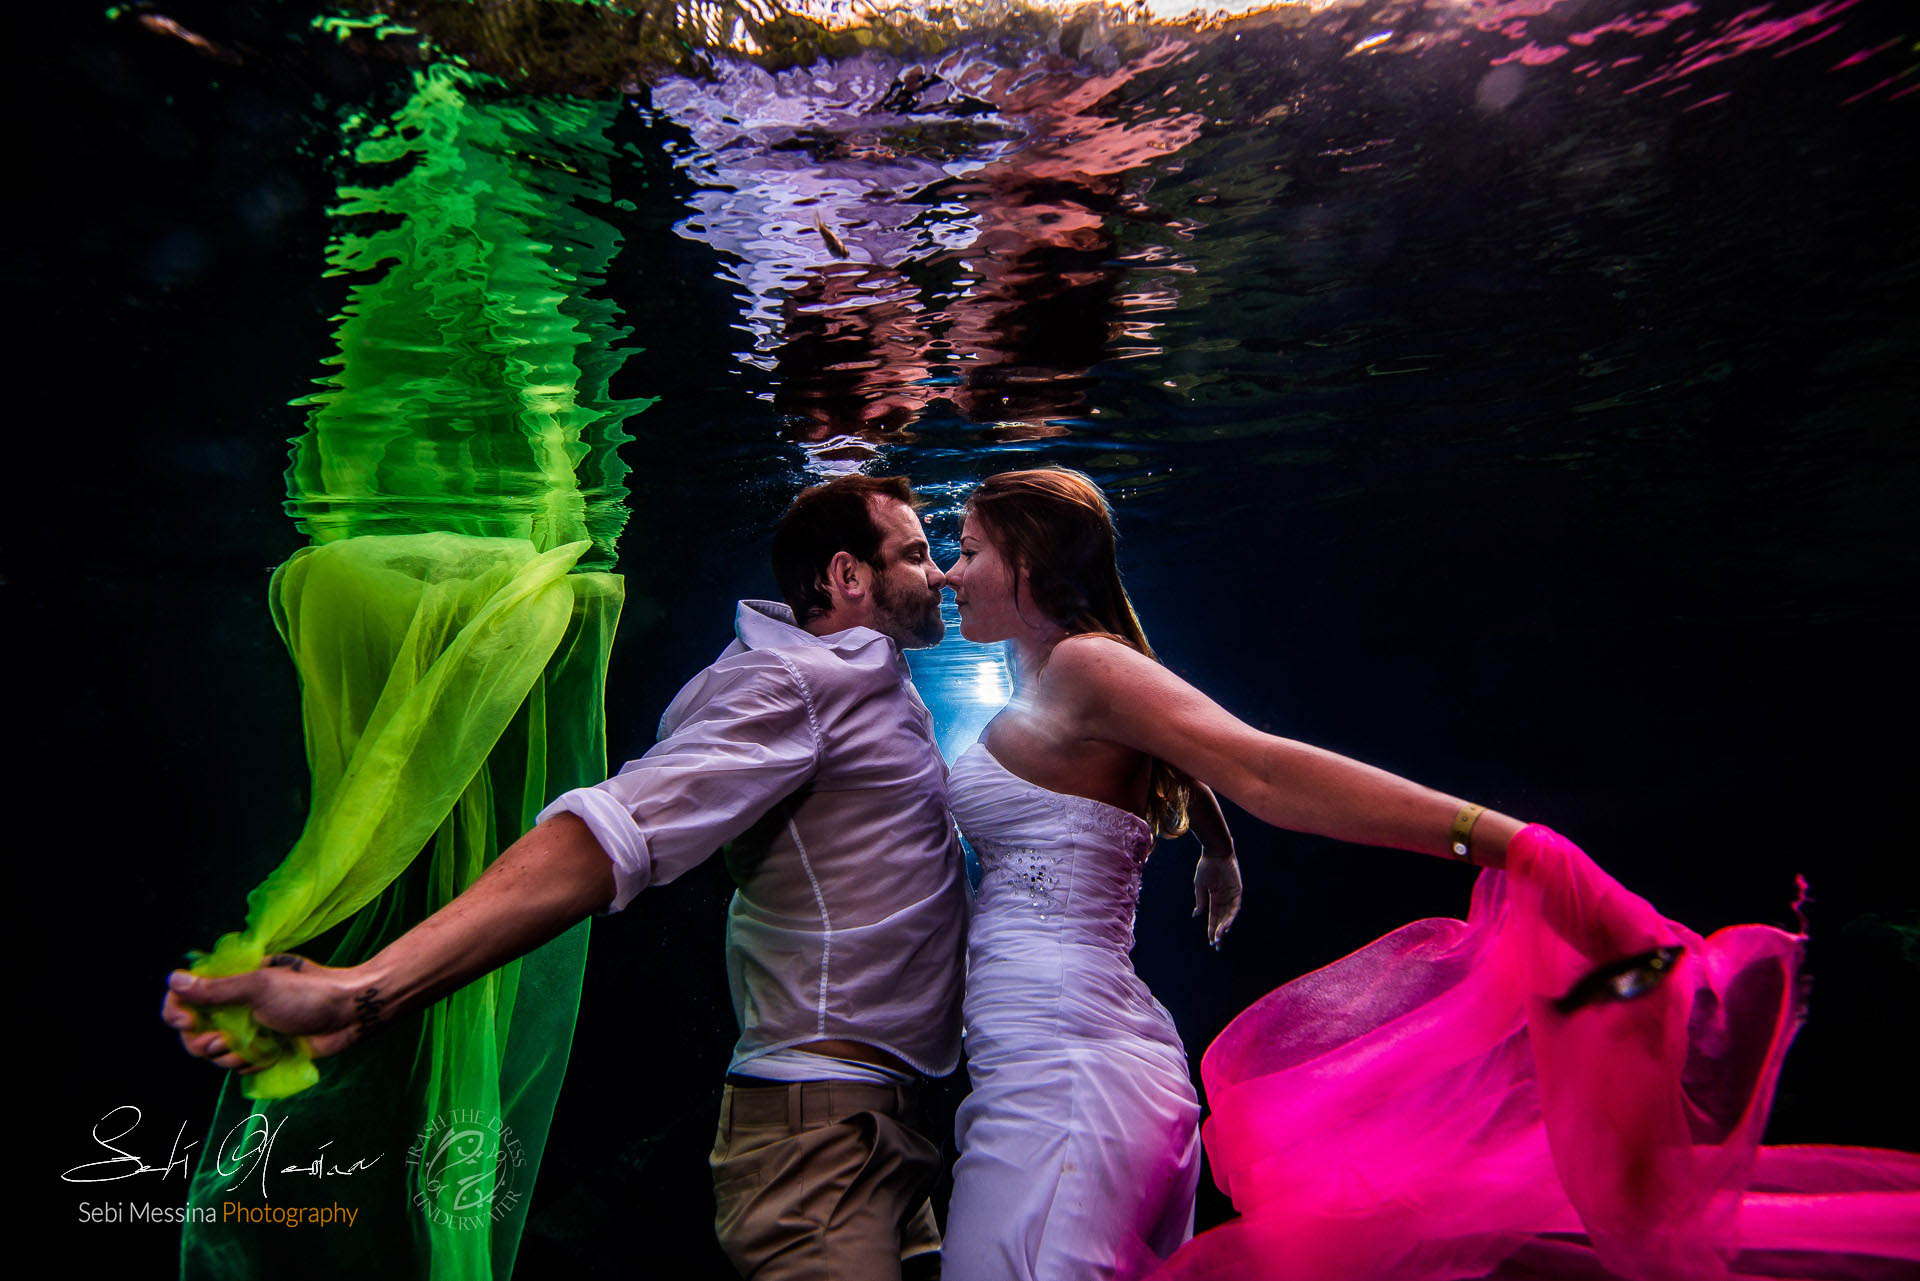 Trash The Dress Underwater - Sebi Messina Photography